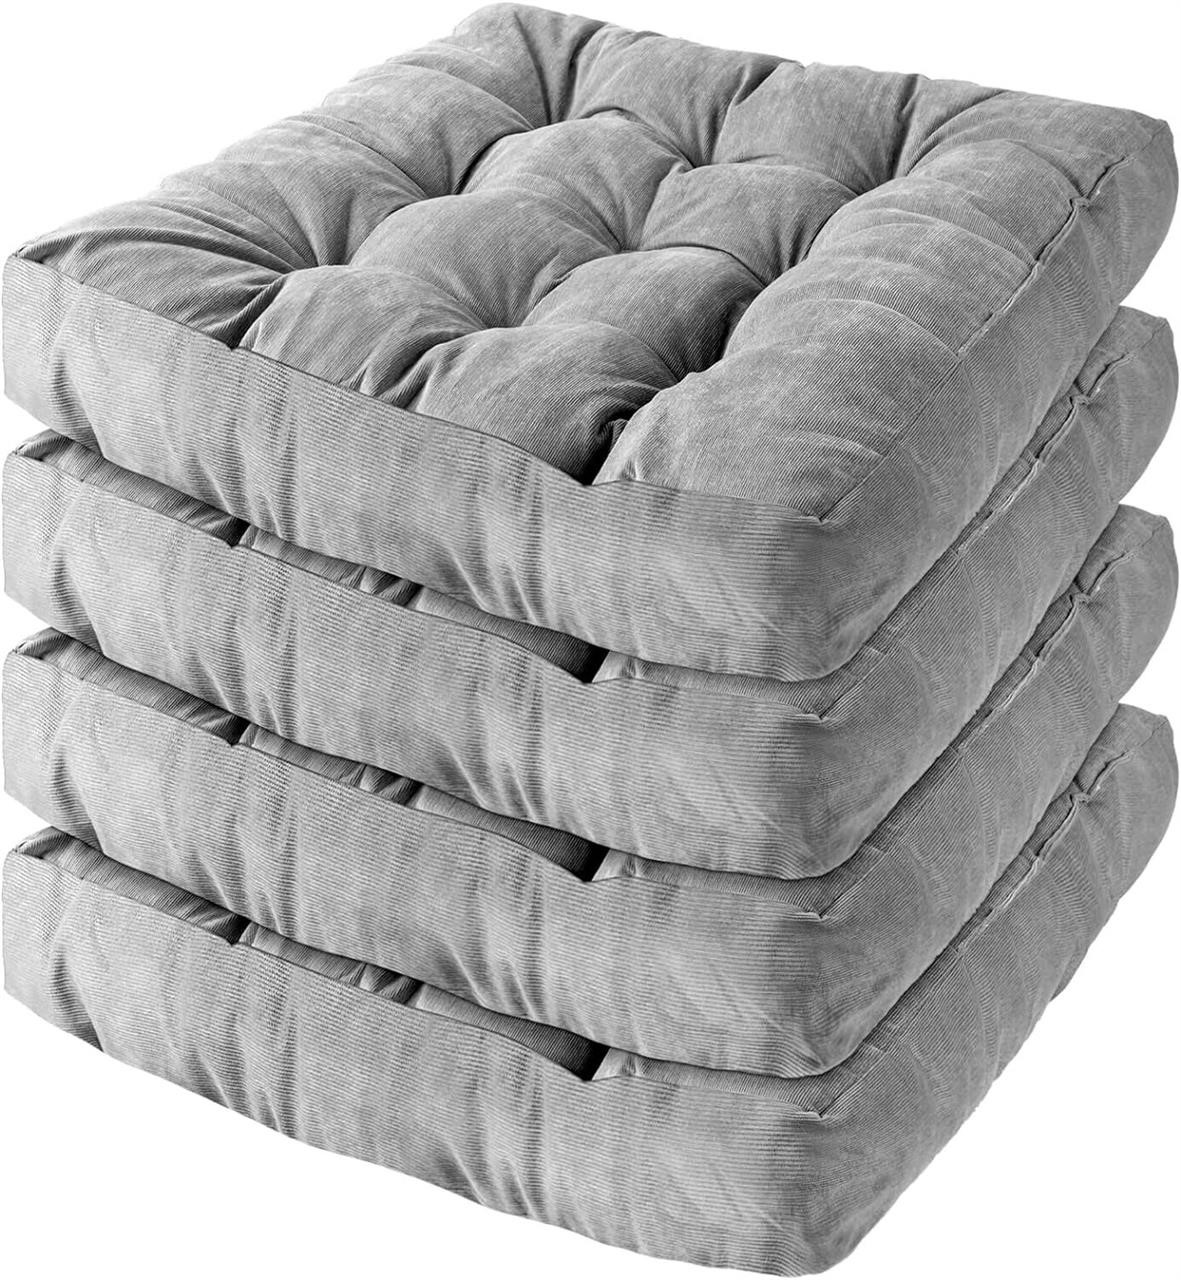 Qunclay 4 Pcs Sitting Cushions 22x22 Inches